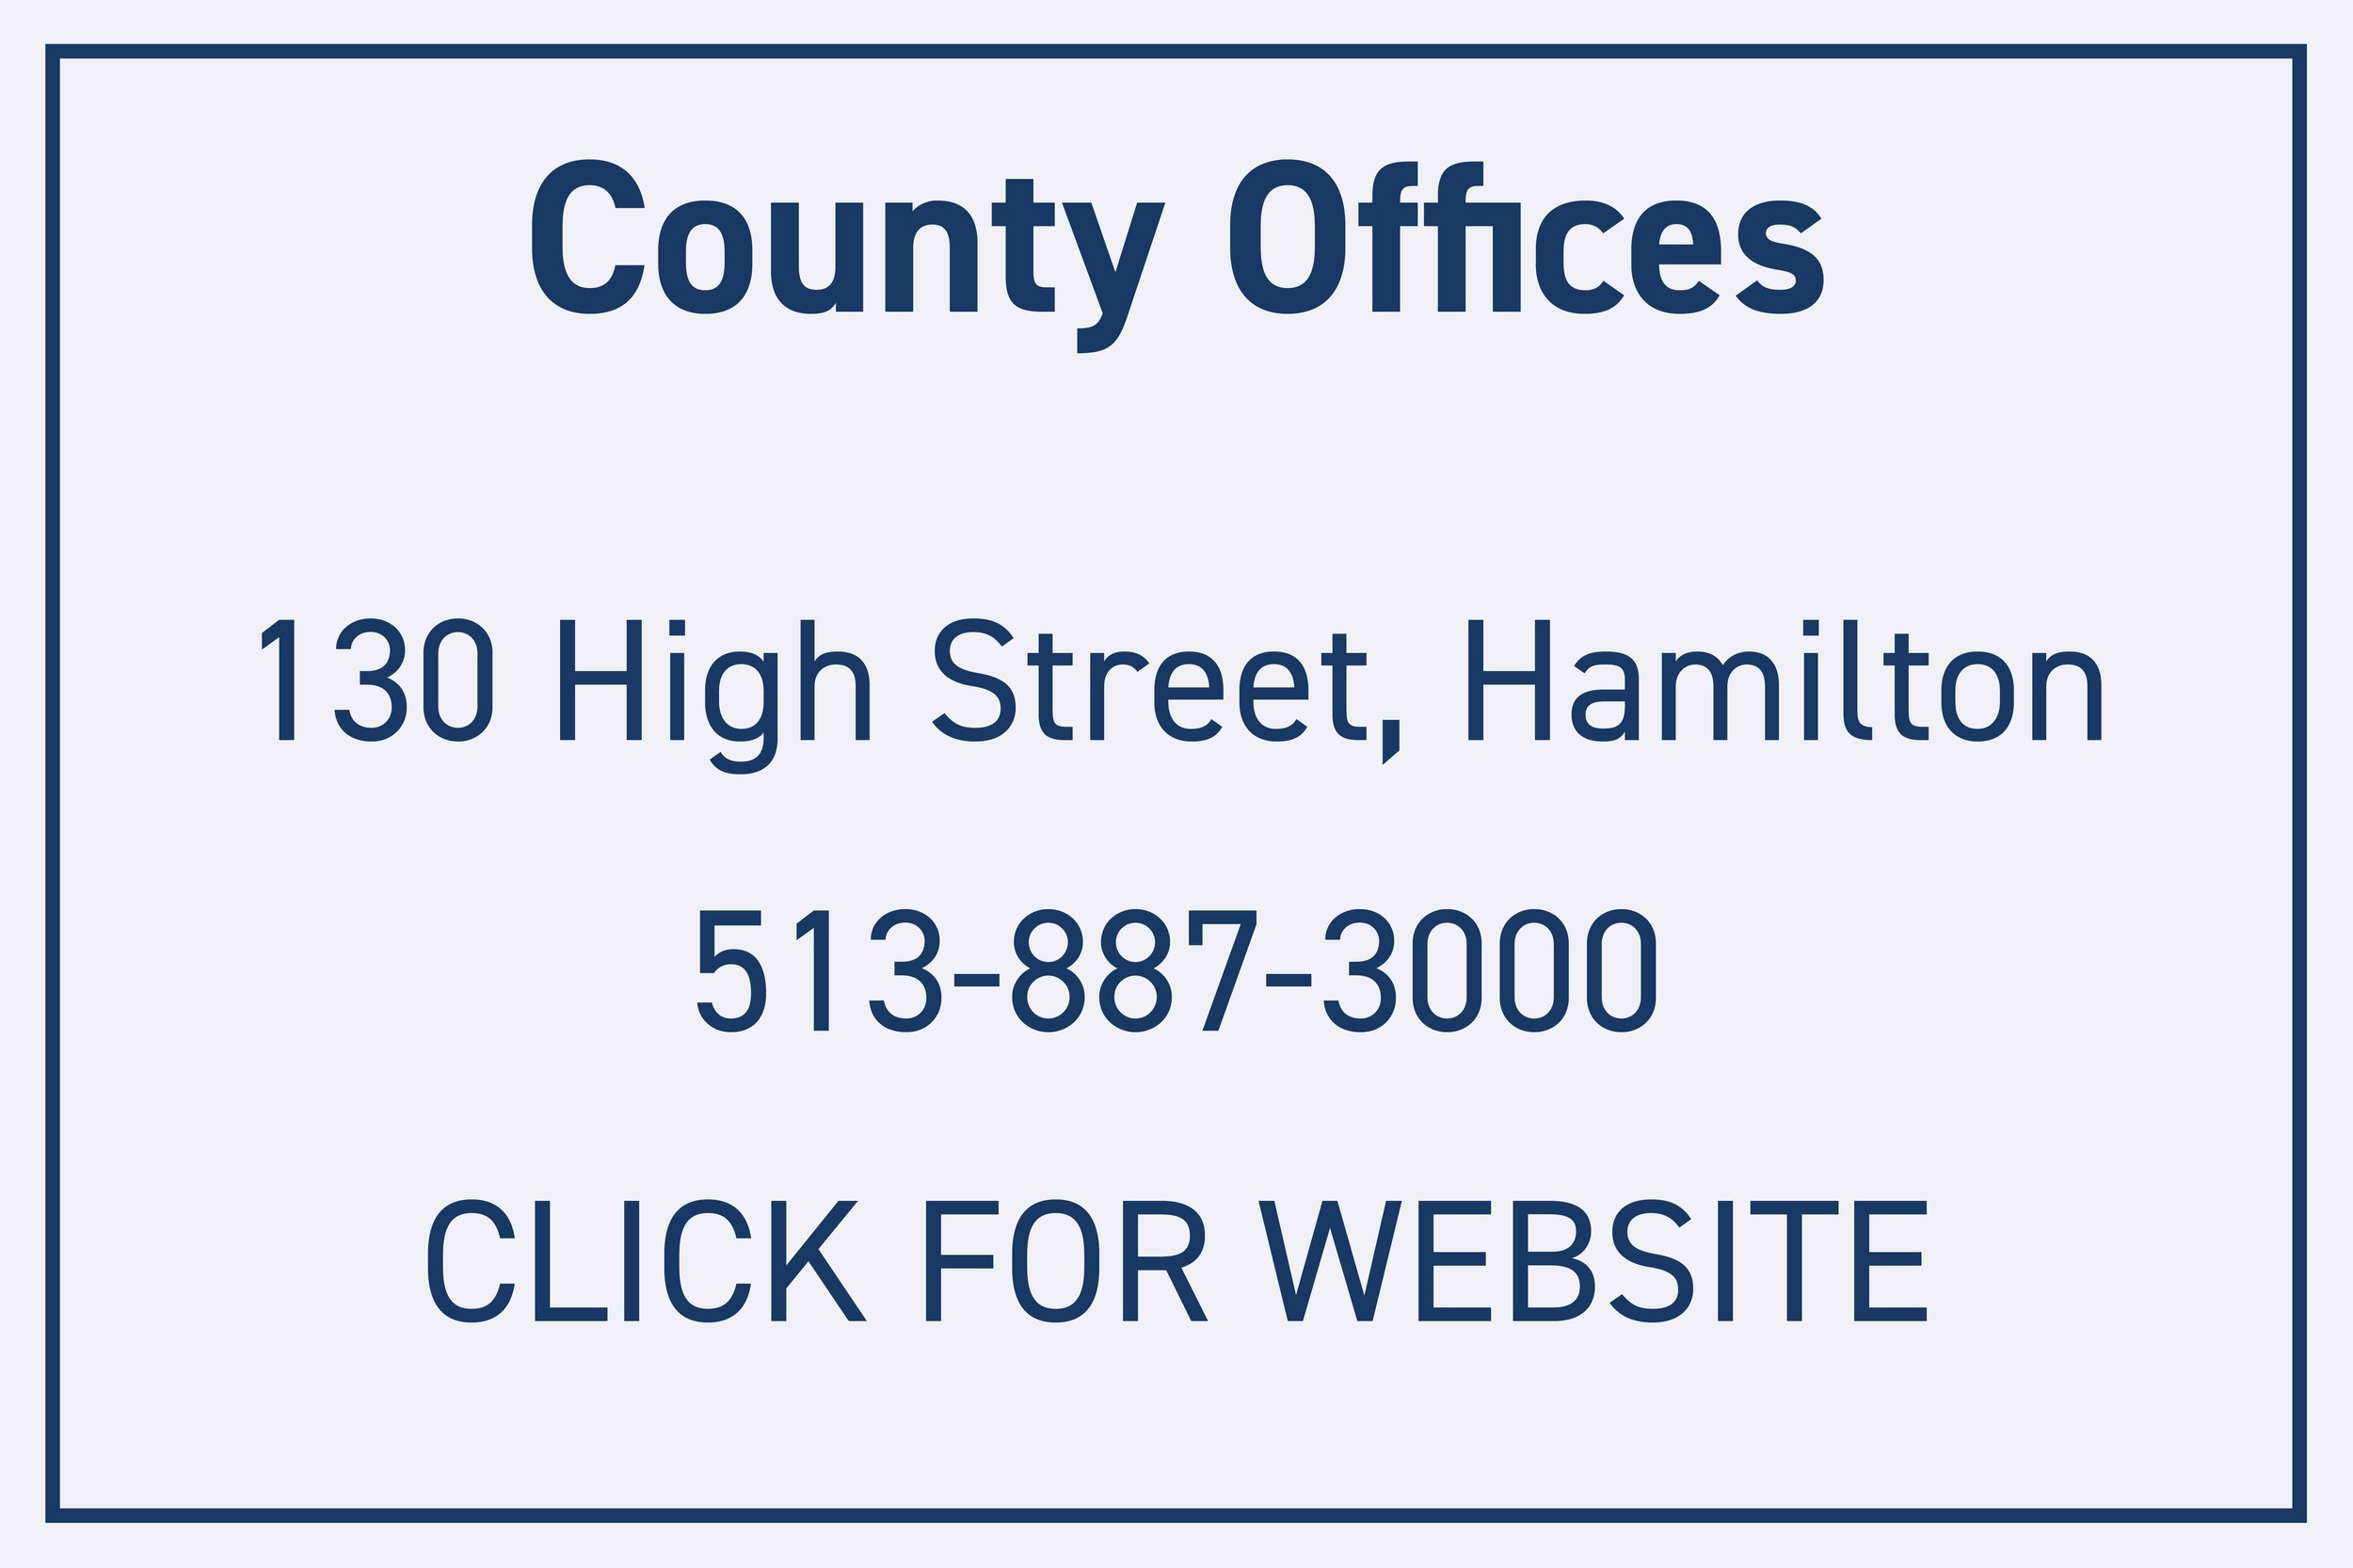 Butler_County Offices-01.jpg